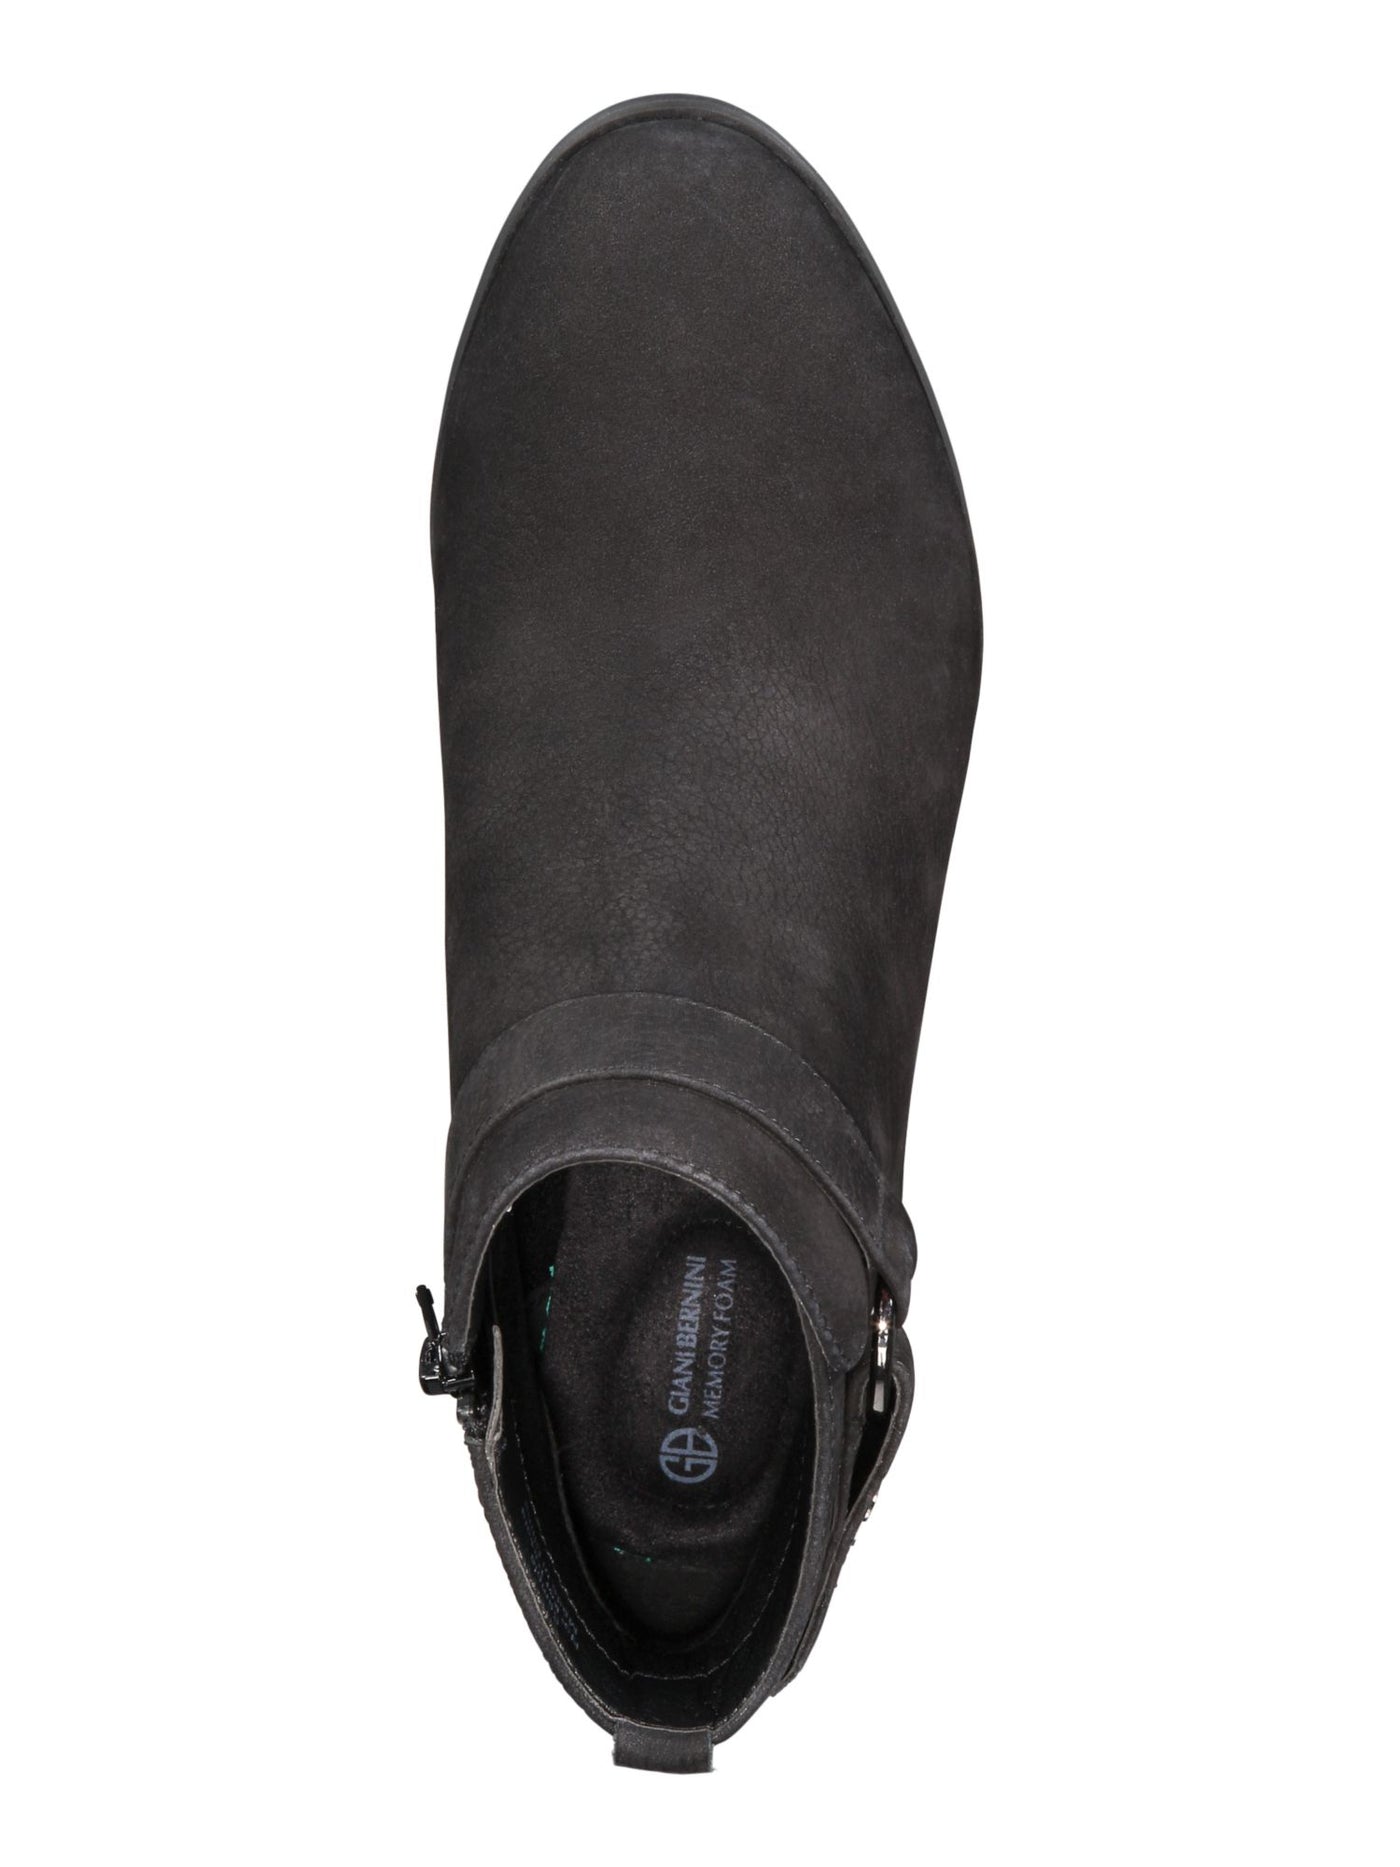 GIANI BERNINI Womens Black Comfort Buckle Accent Putneyy Round Toe Block Heel Zip-Up Leather Booties 6 M